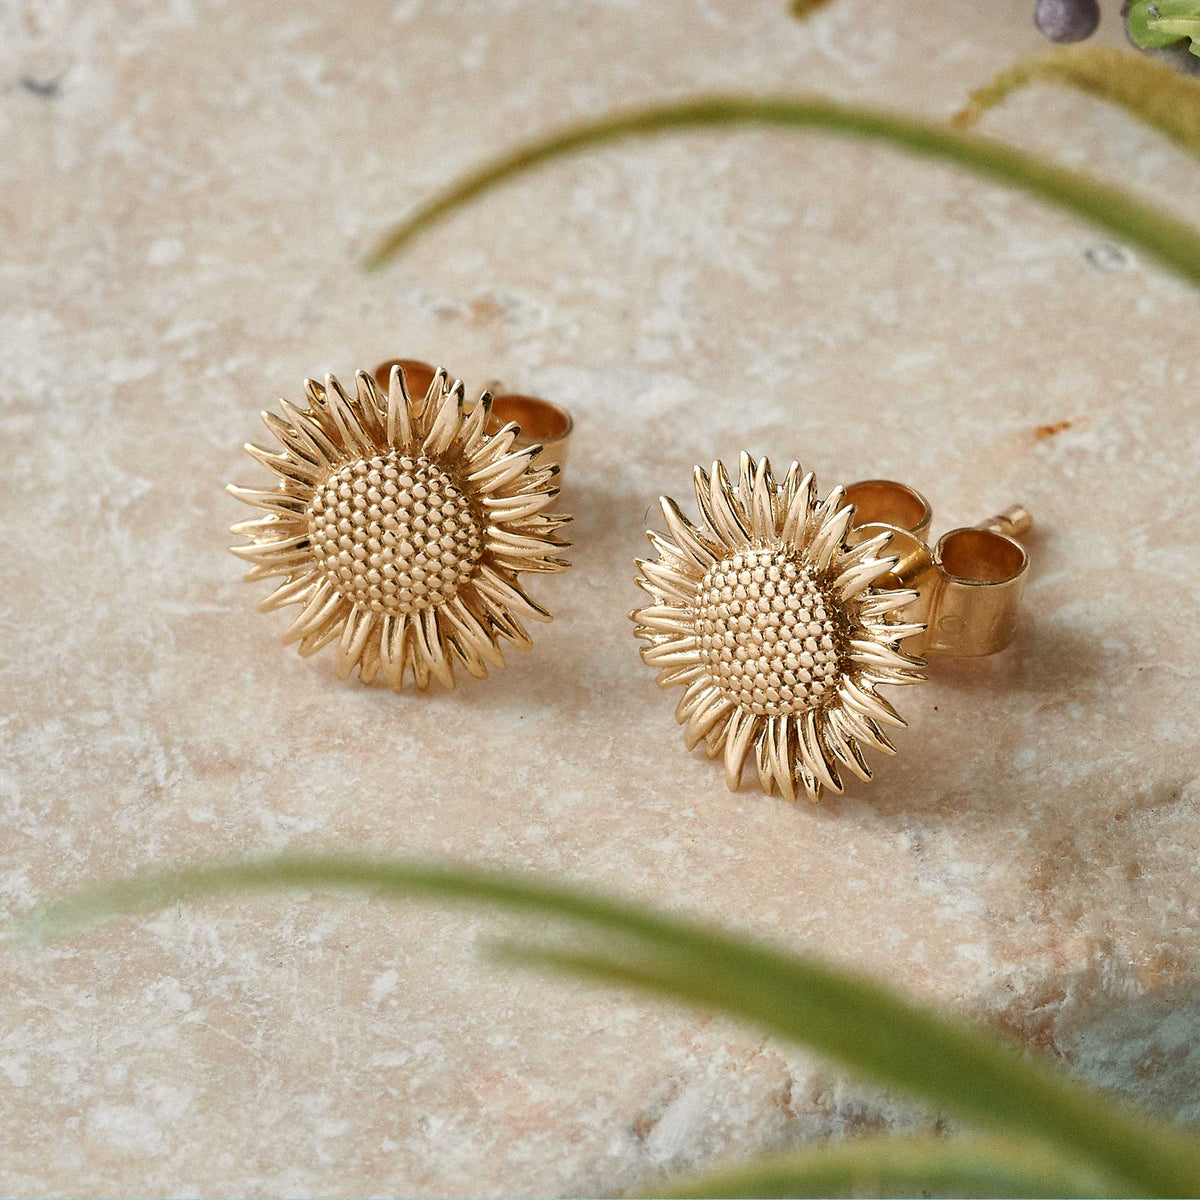 Small Batch-Made Gold Sunflower Earrings in UK